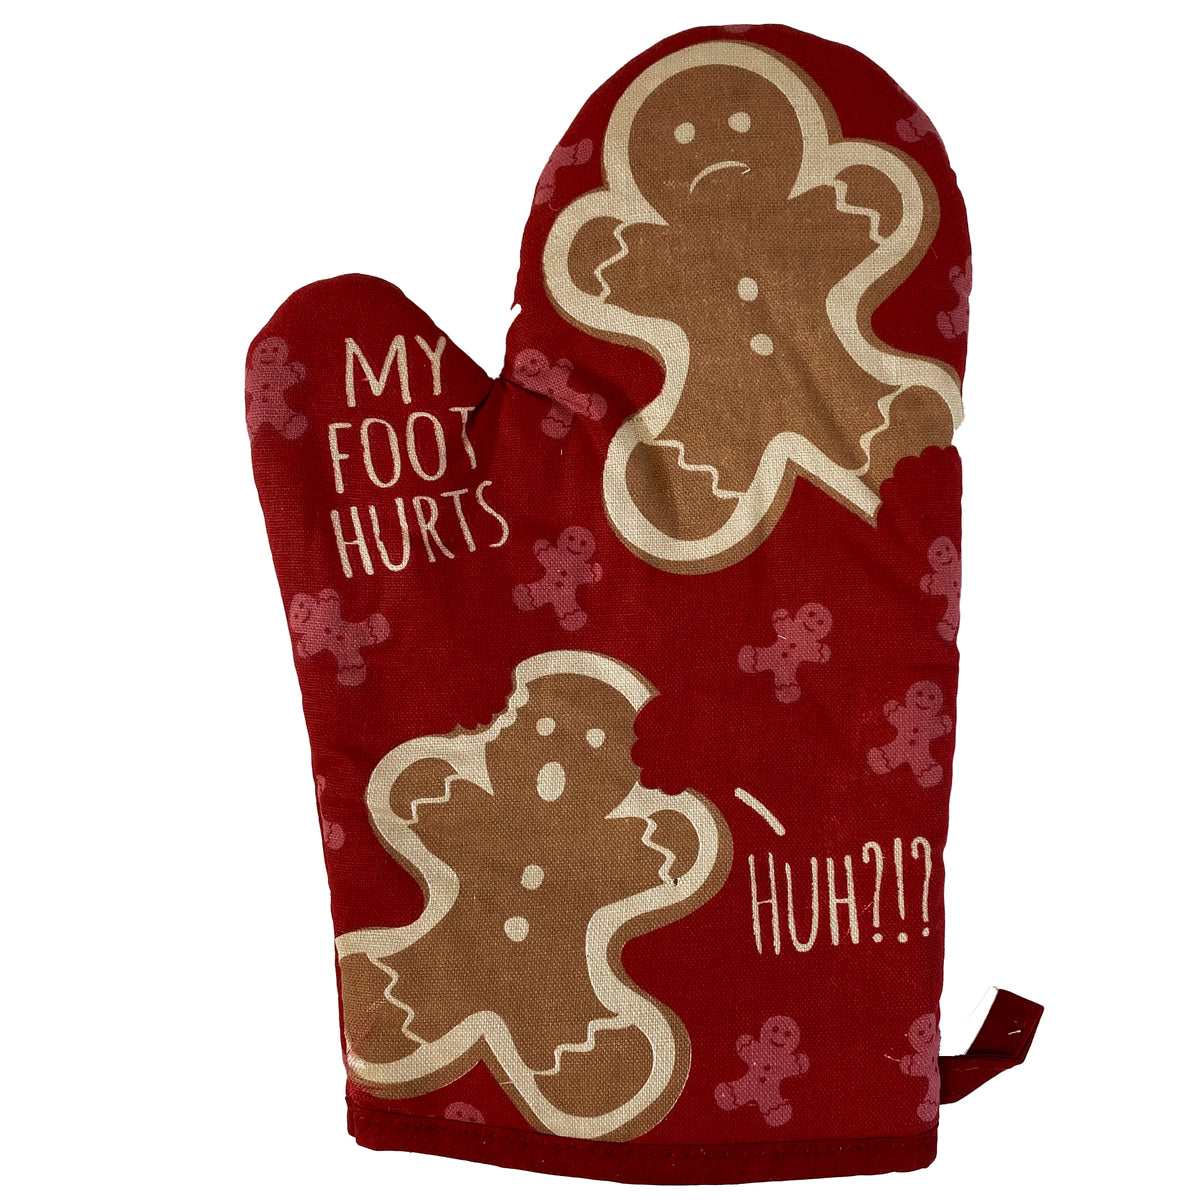 Funny Gingerbread Foot My Foot Hurts! Huh? Nerdy Christmas Food Tee